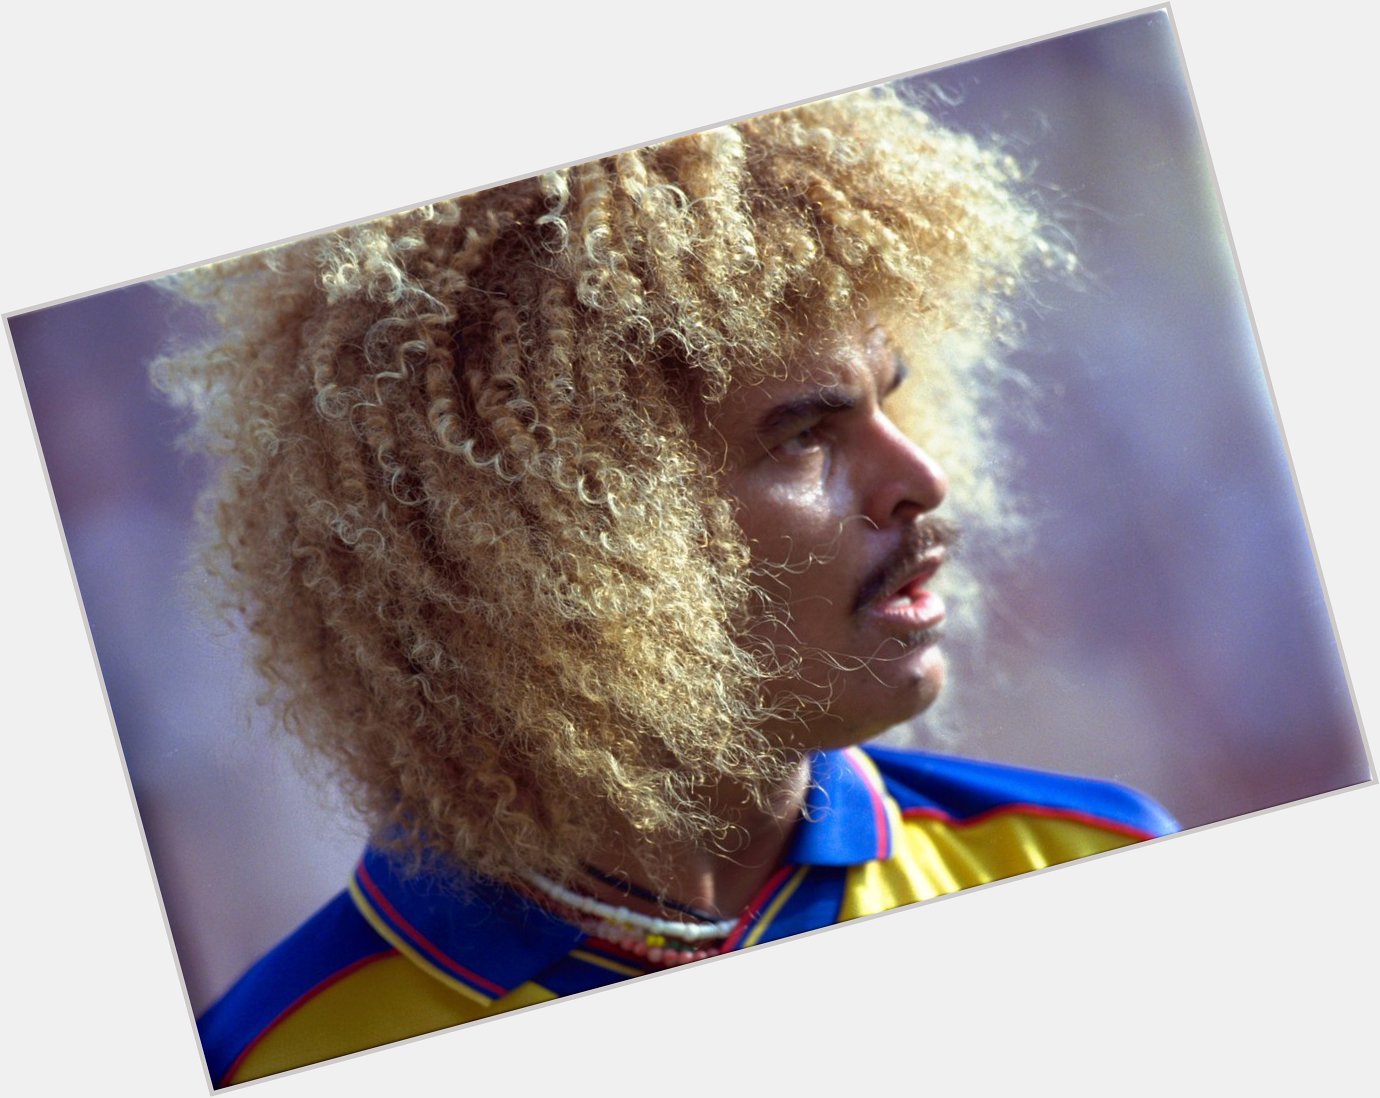 The Colombian creative midfielder with the crazy hair.  Happy birthday Carlos Valderrama  